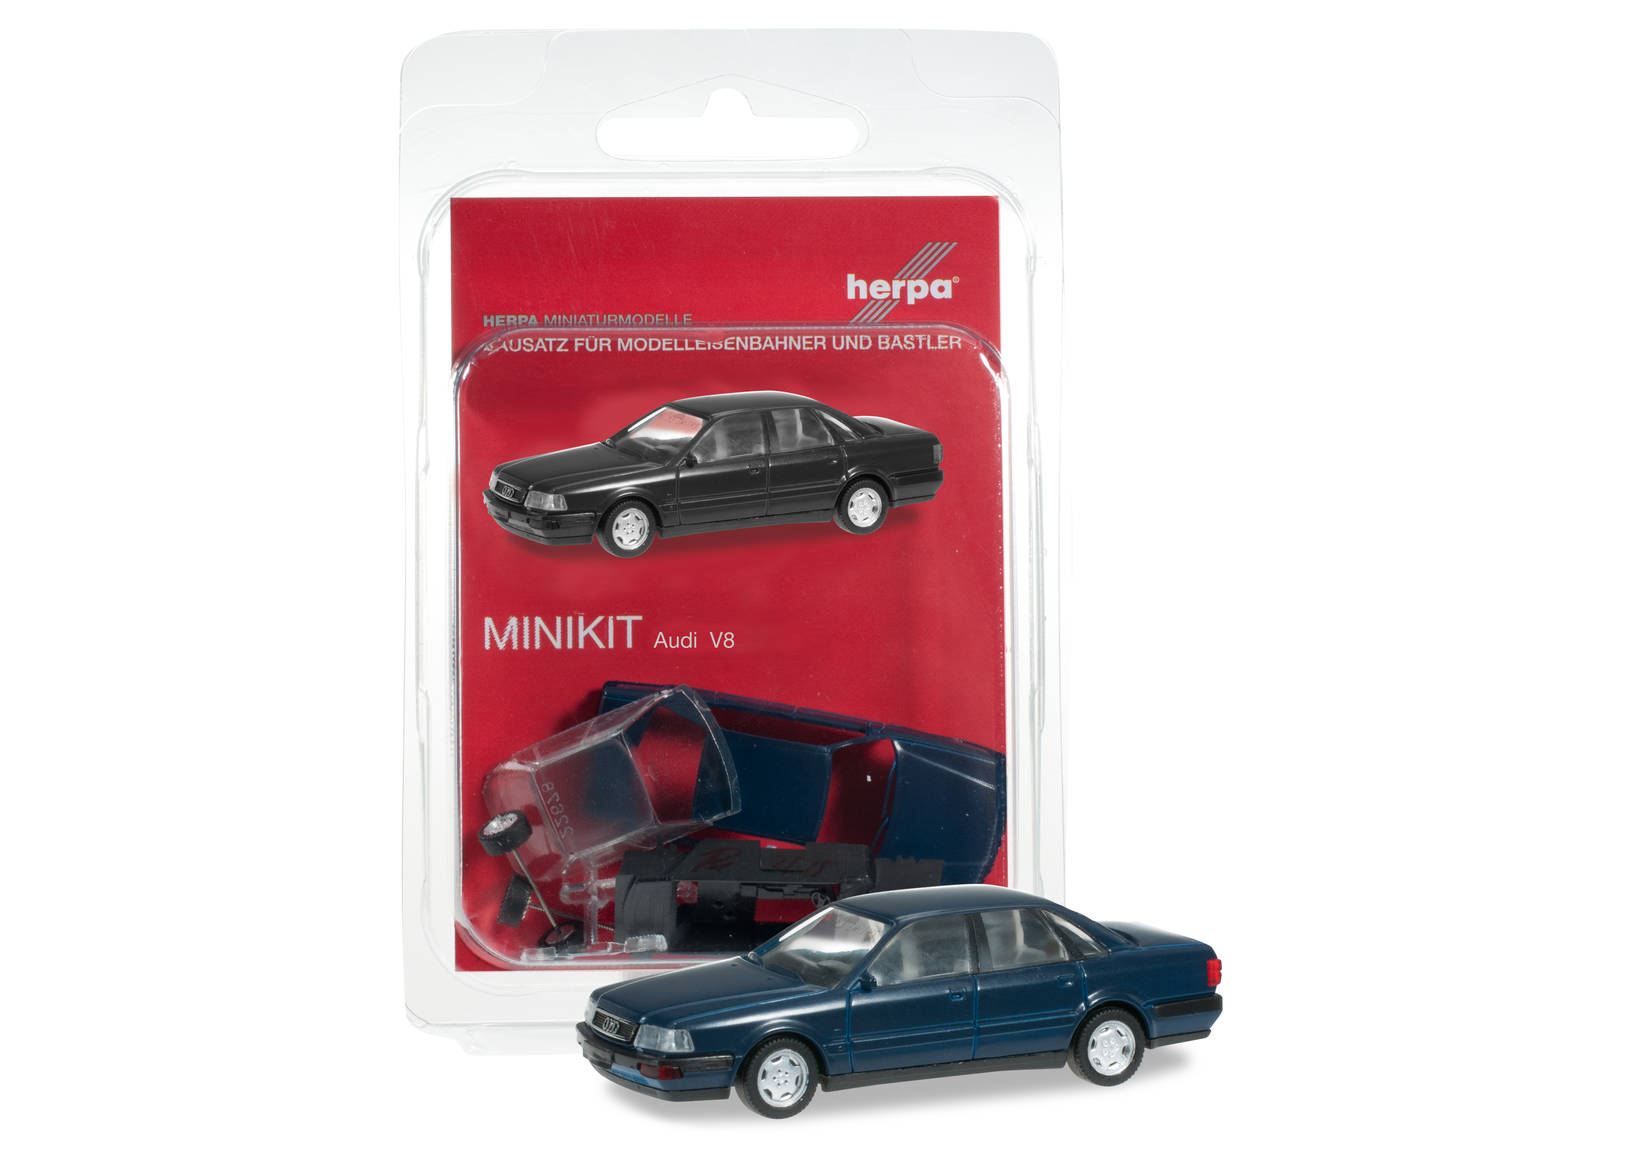 Minikit Audi V8, steel blue